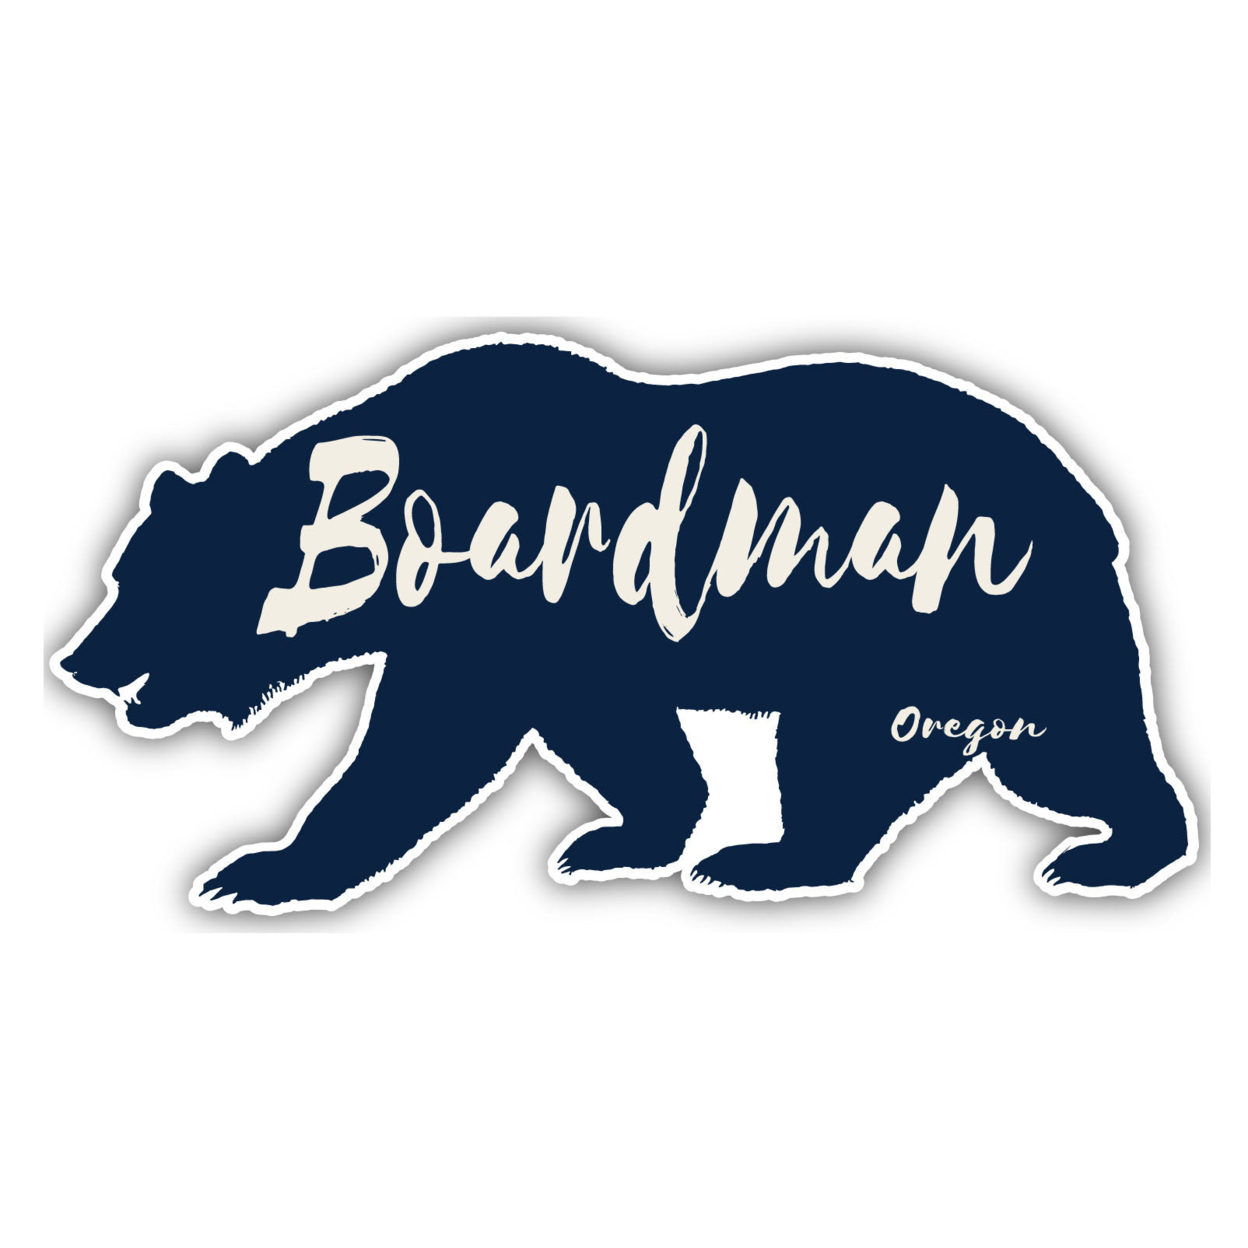 Boardman Oregon Souvenir Decorative Stickers (Choose Theme And Size) - 4-Pack, 4-Inch, Camp Life